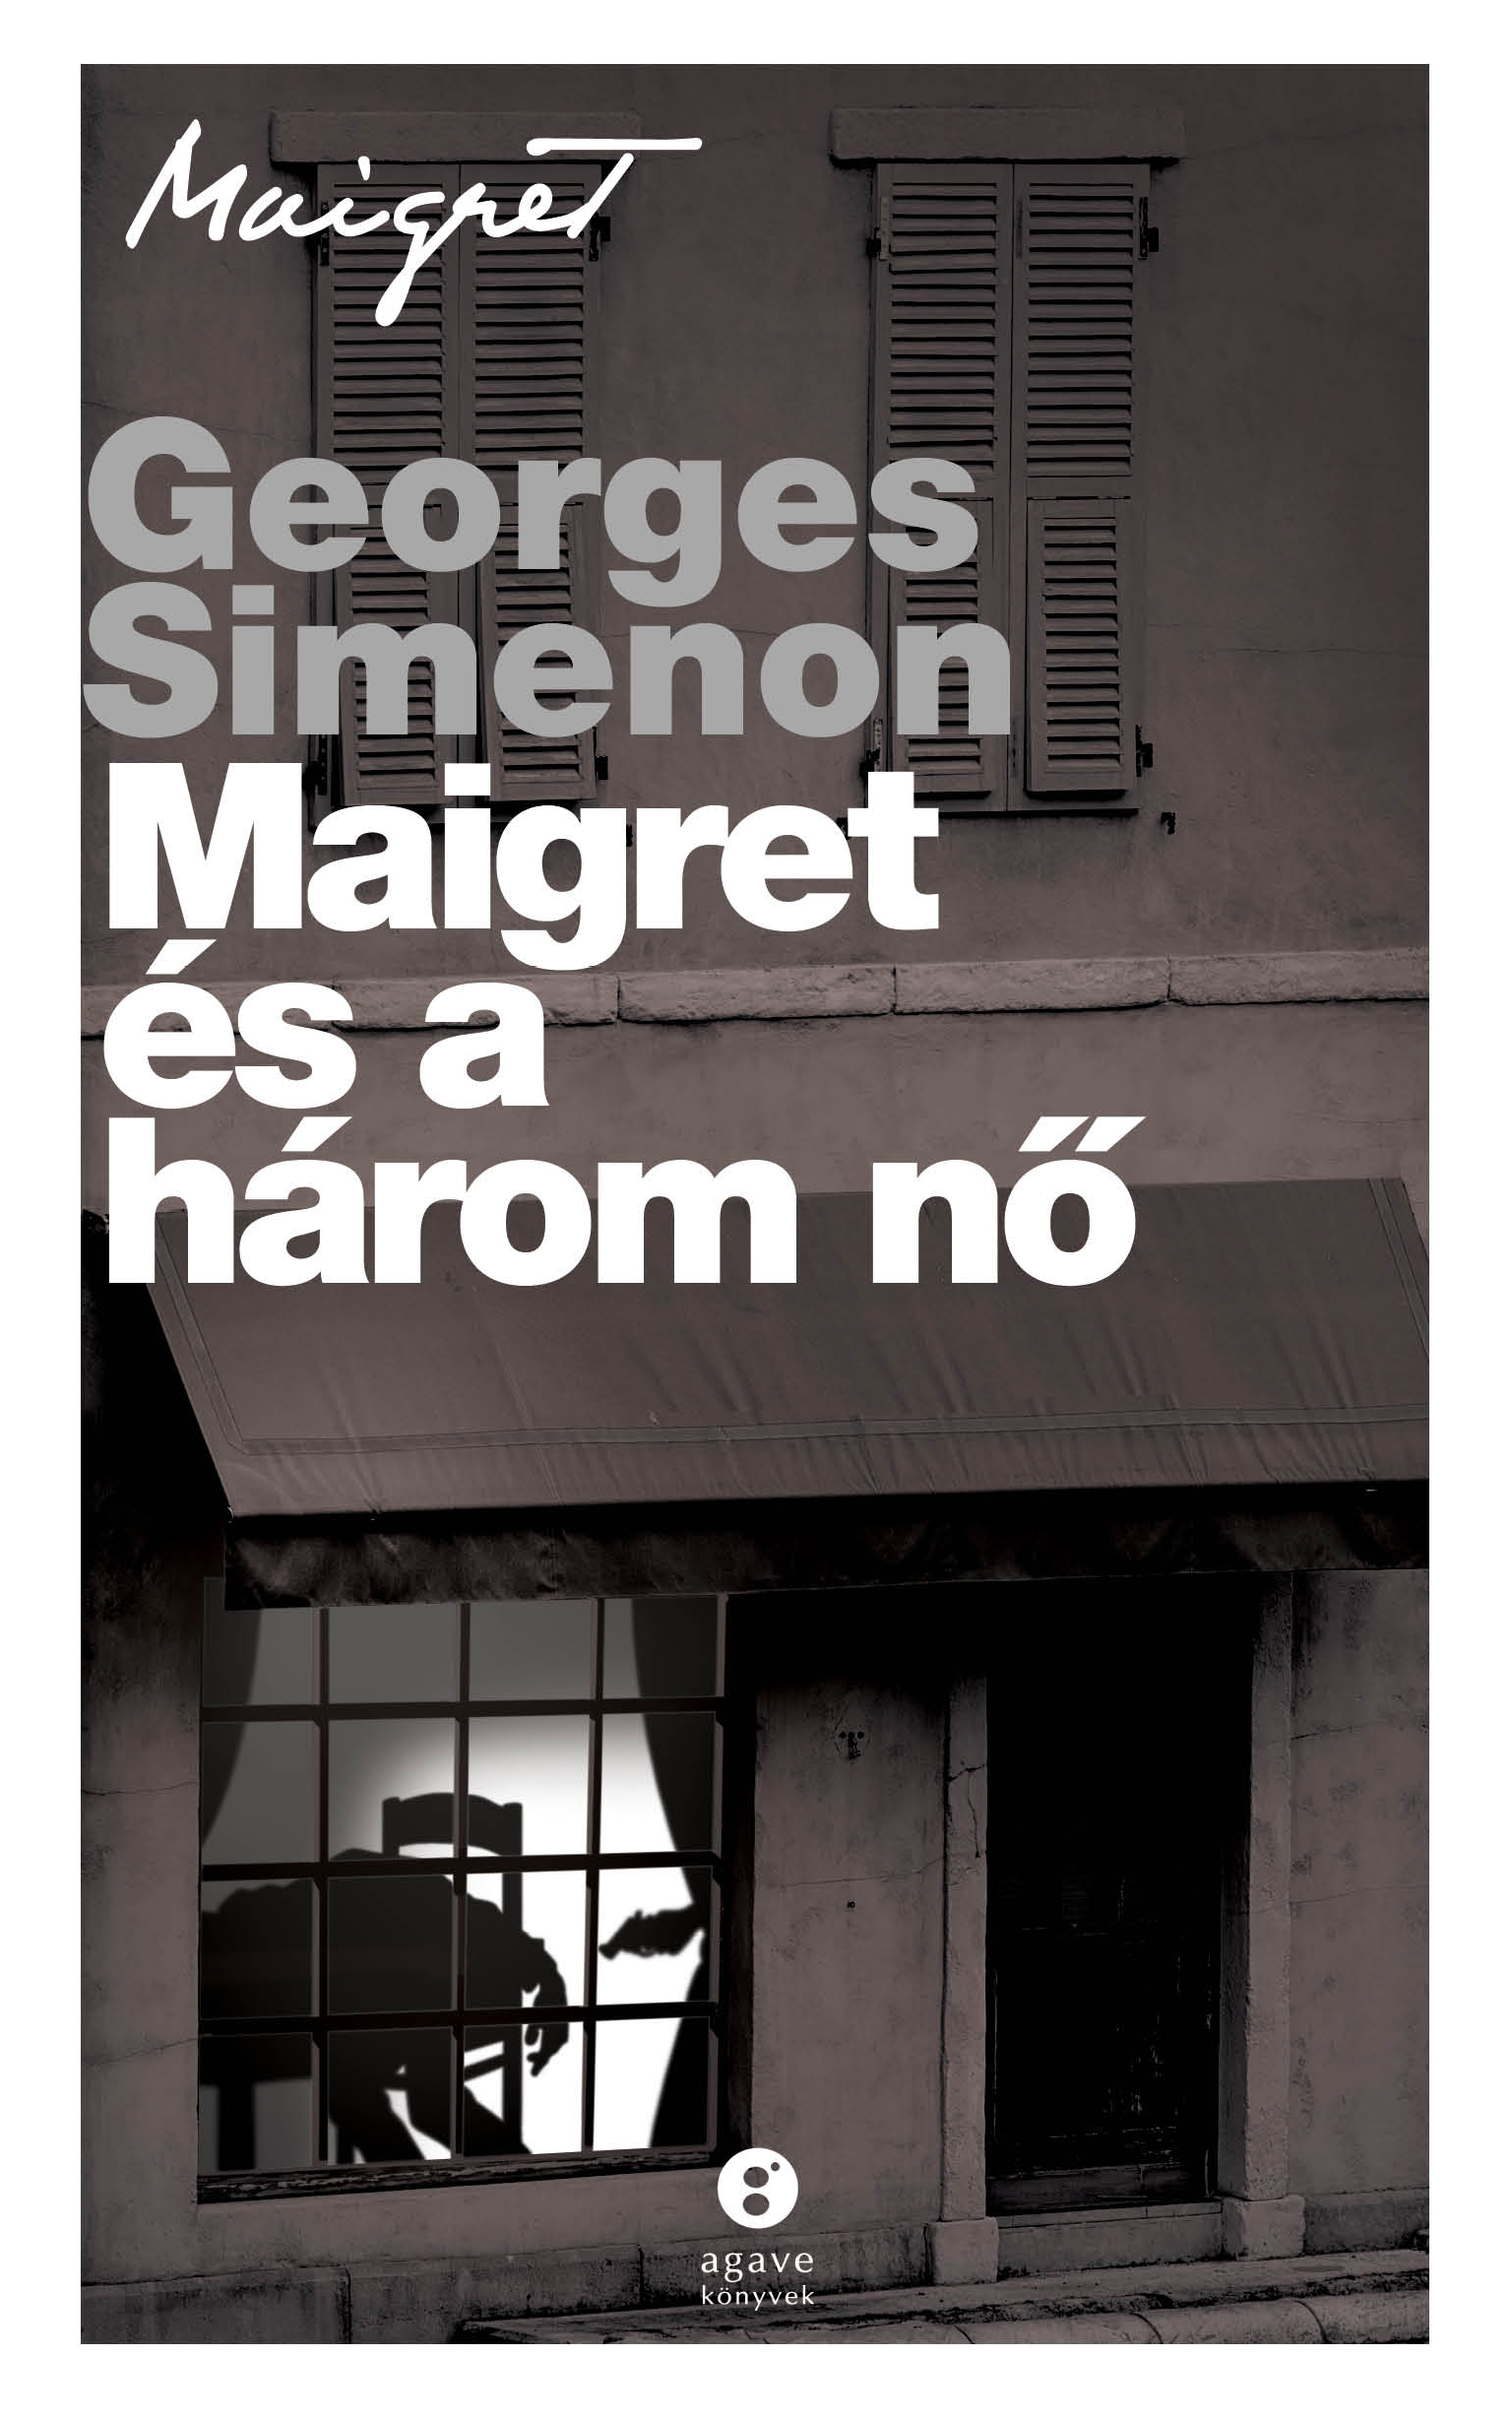 Georges_Simenon_Maigret_es_a_harom_no_b1_300dpi.jpg